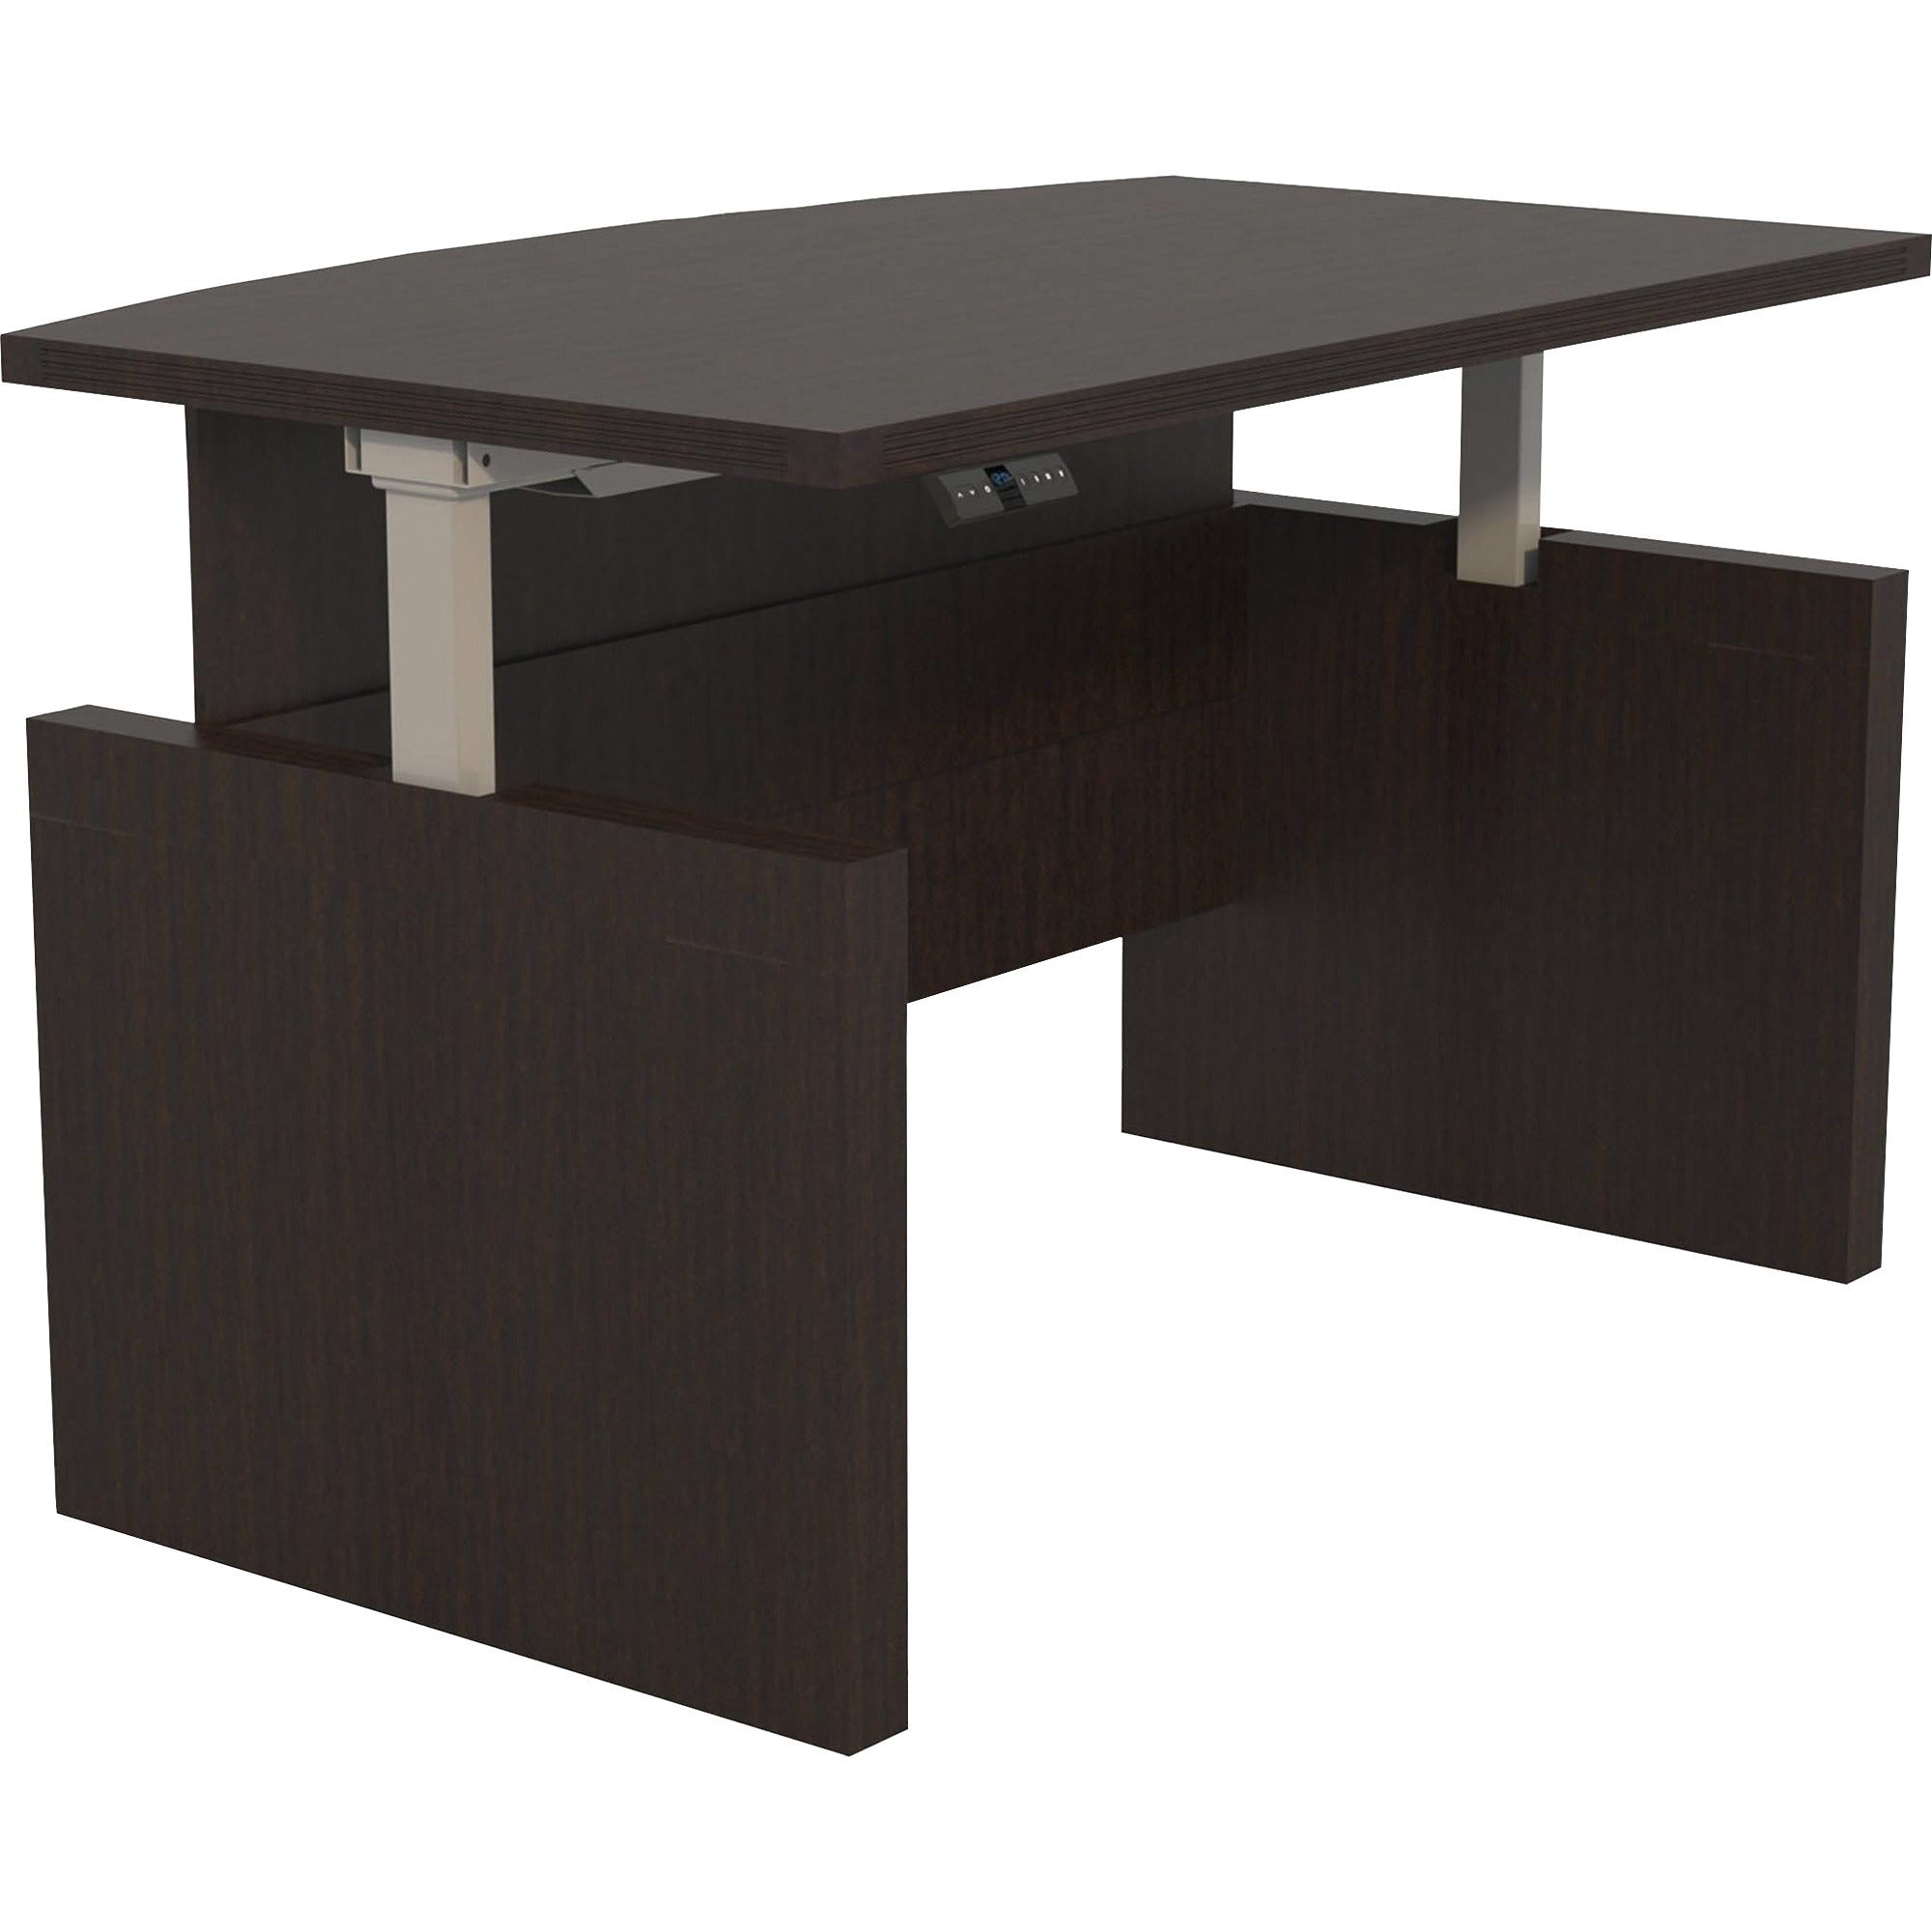 safco-aberdeen-height-adjustable-desk-16-work-surface-72493-desk-finish-mocha-laminate_safabdh7242ldc - 1